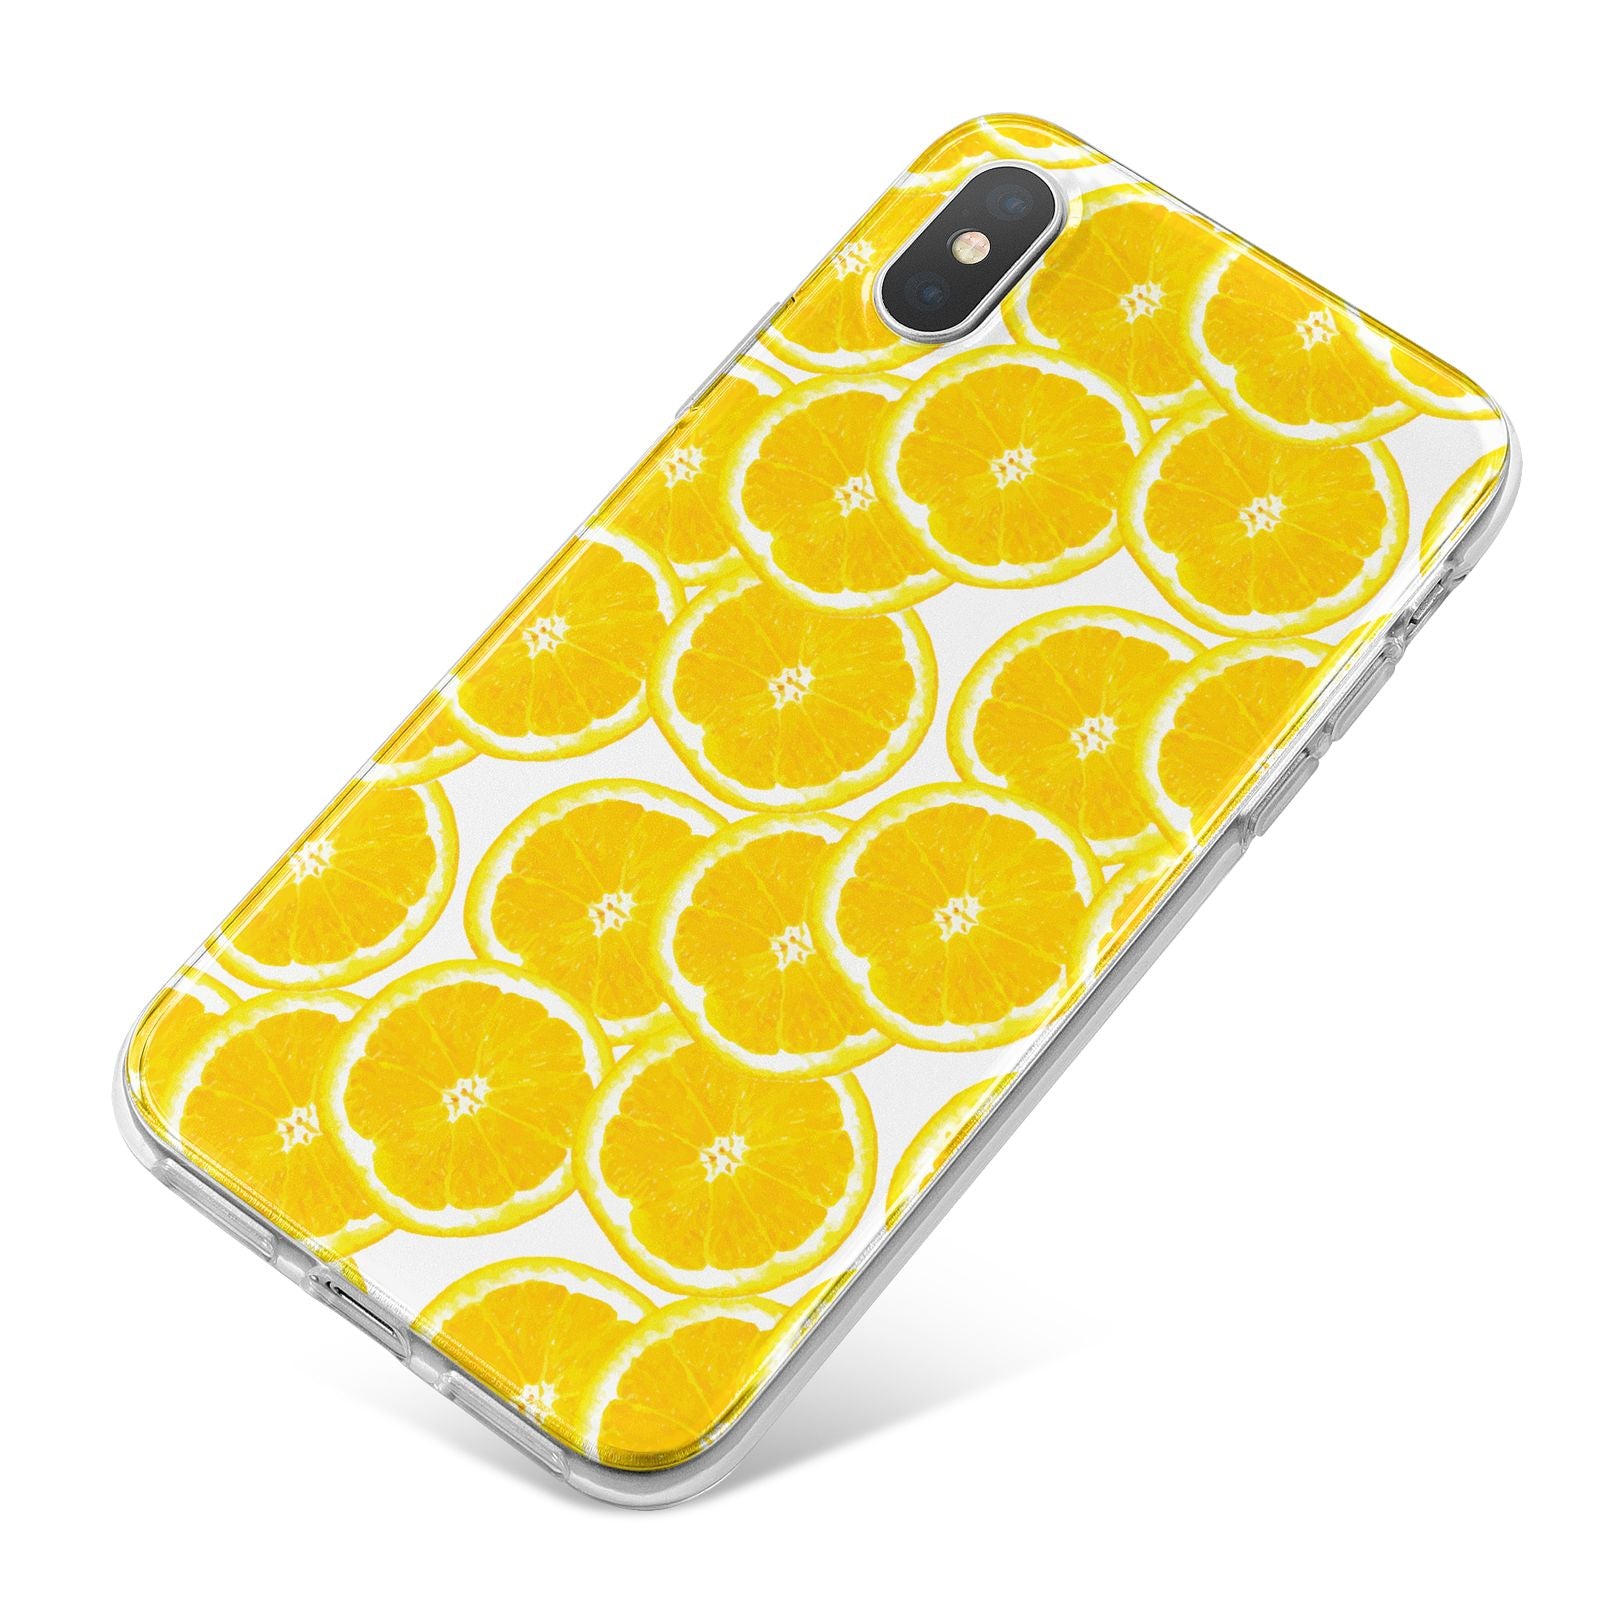 Lemon Fruit Slices iPhone X Bumper Case on Silver iPhone